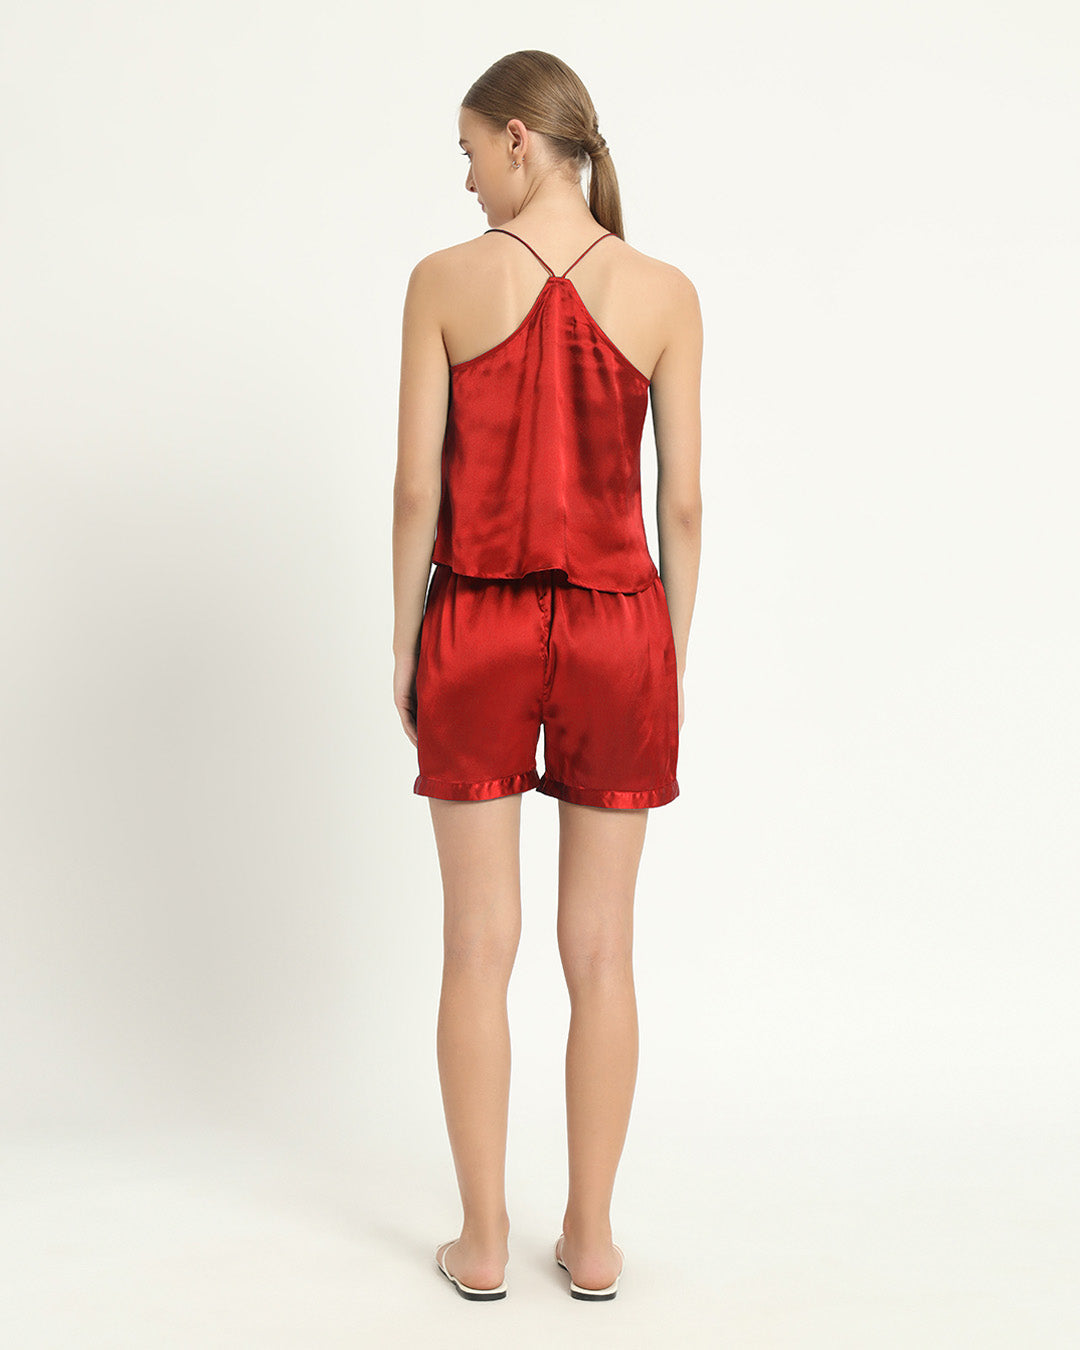 Satin Chic Camisole -Shorts Scarlet Red PJ Set